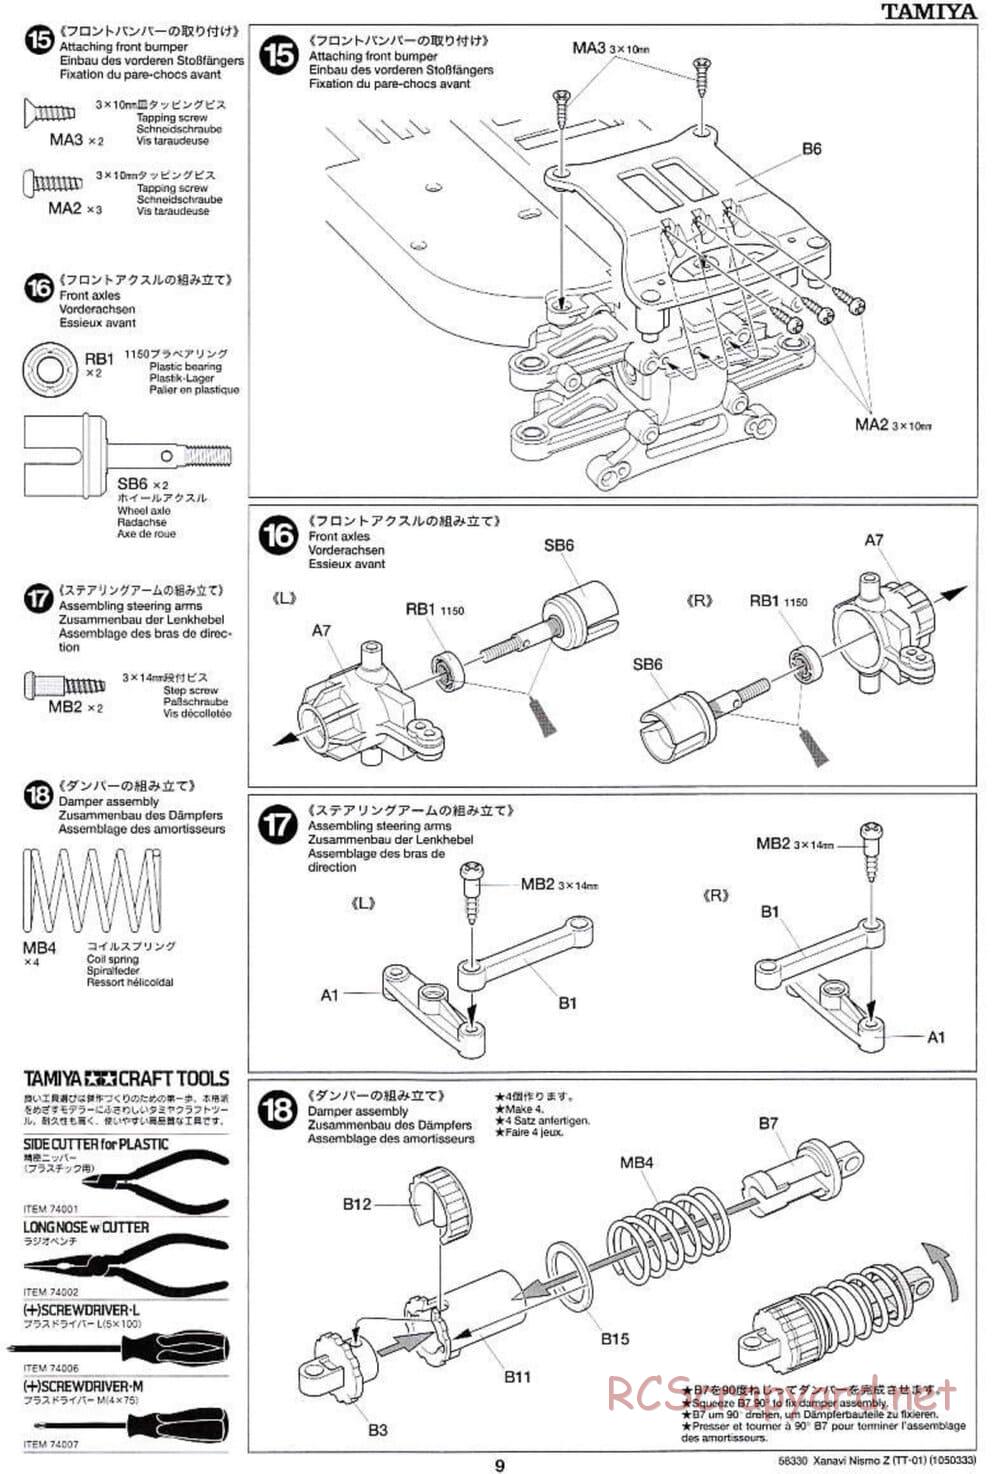 Tamiya - Xanavi Nismo Z - TT-01 Chassis - Manual - Page 9